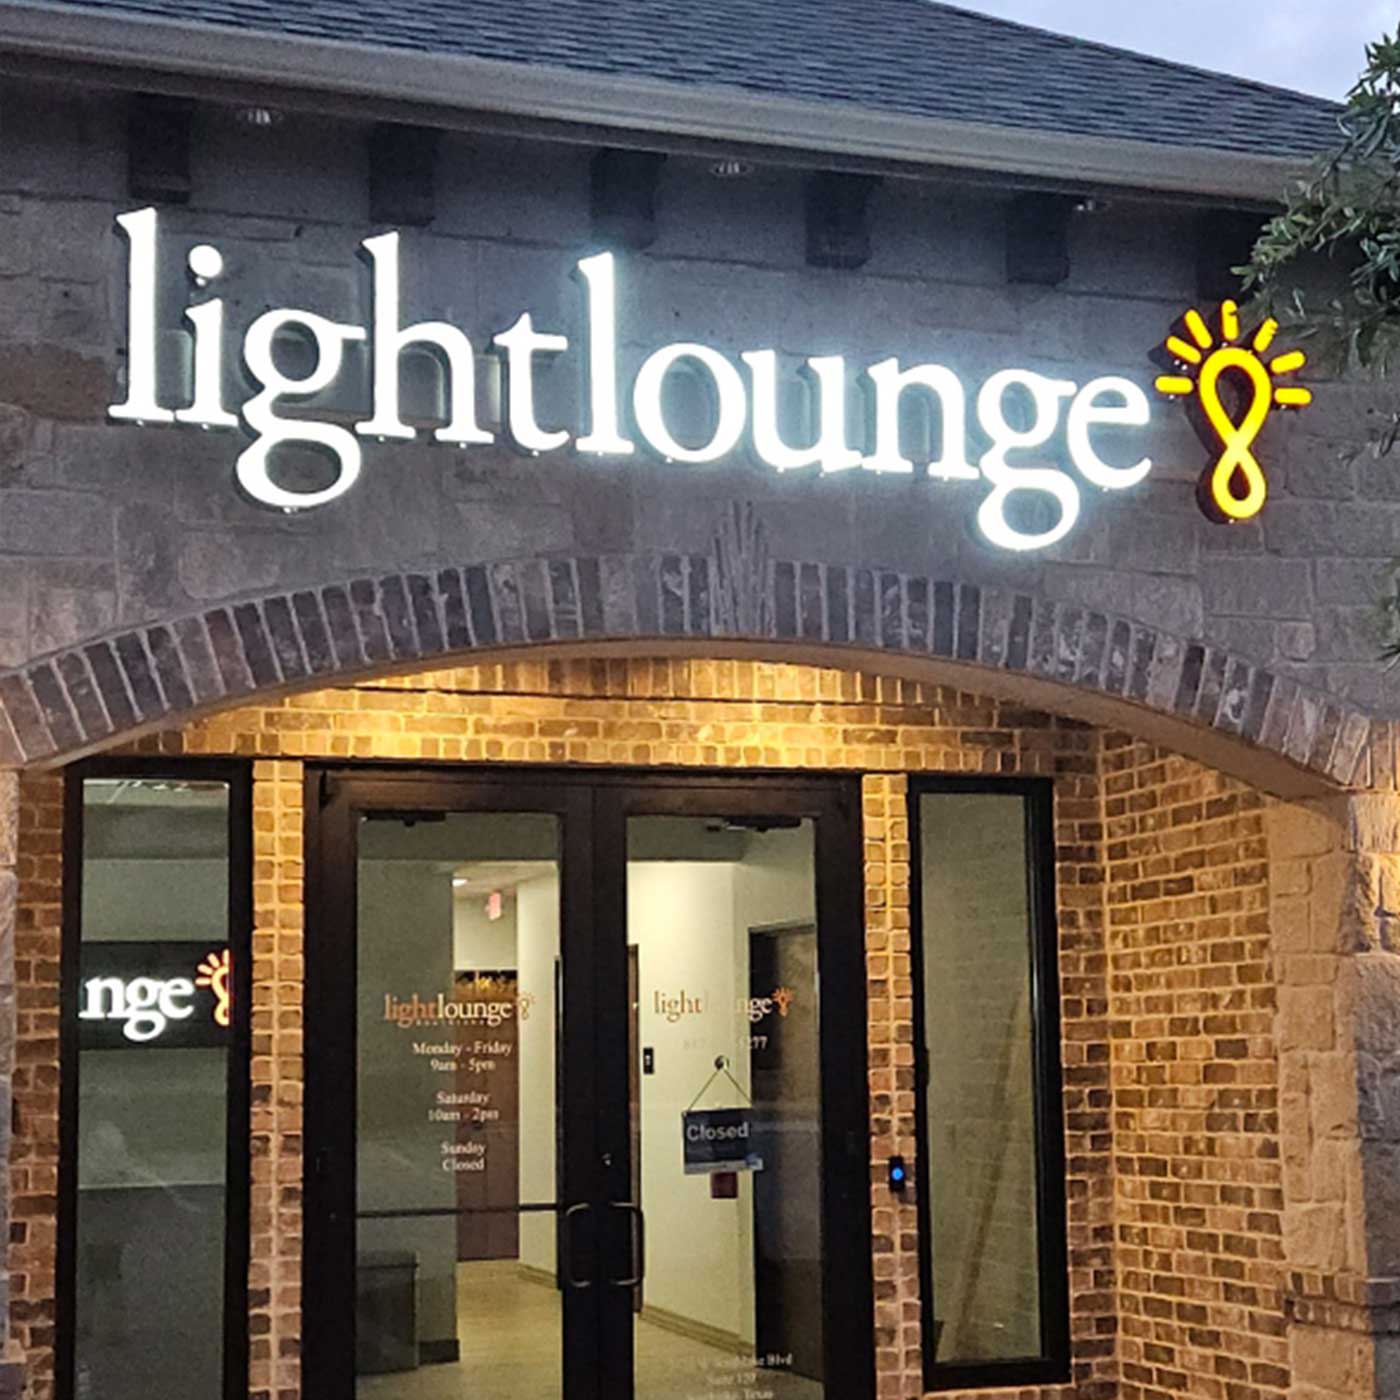 Light Lounge Southlake Texas store front.